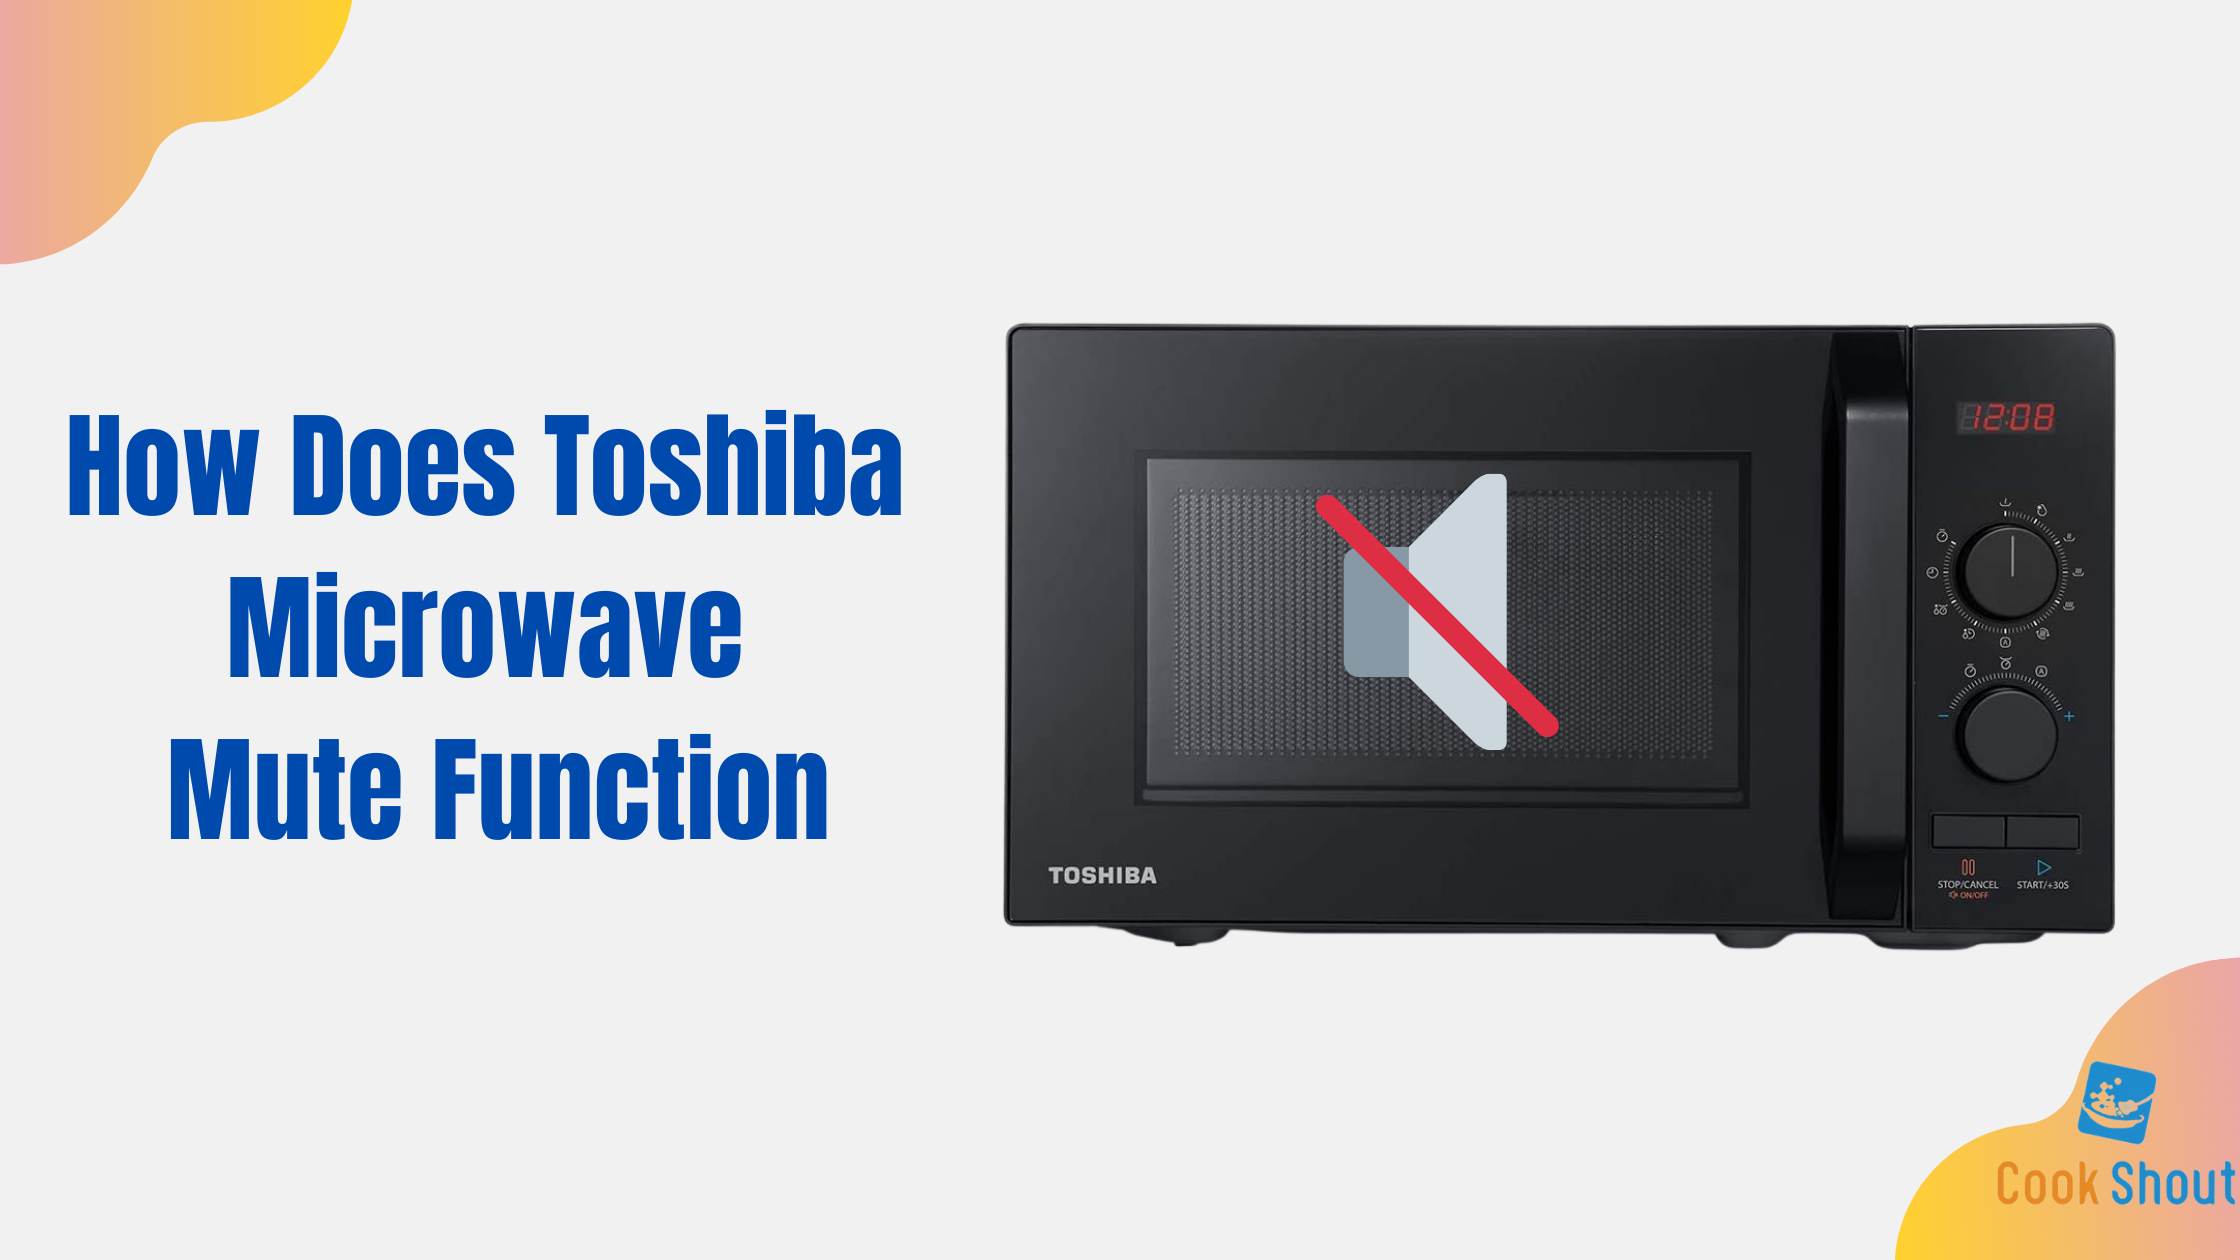 Toshiba Microwave Mute Function